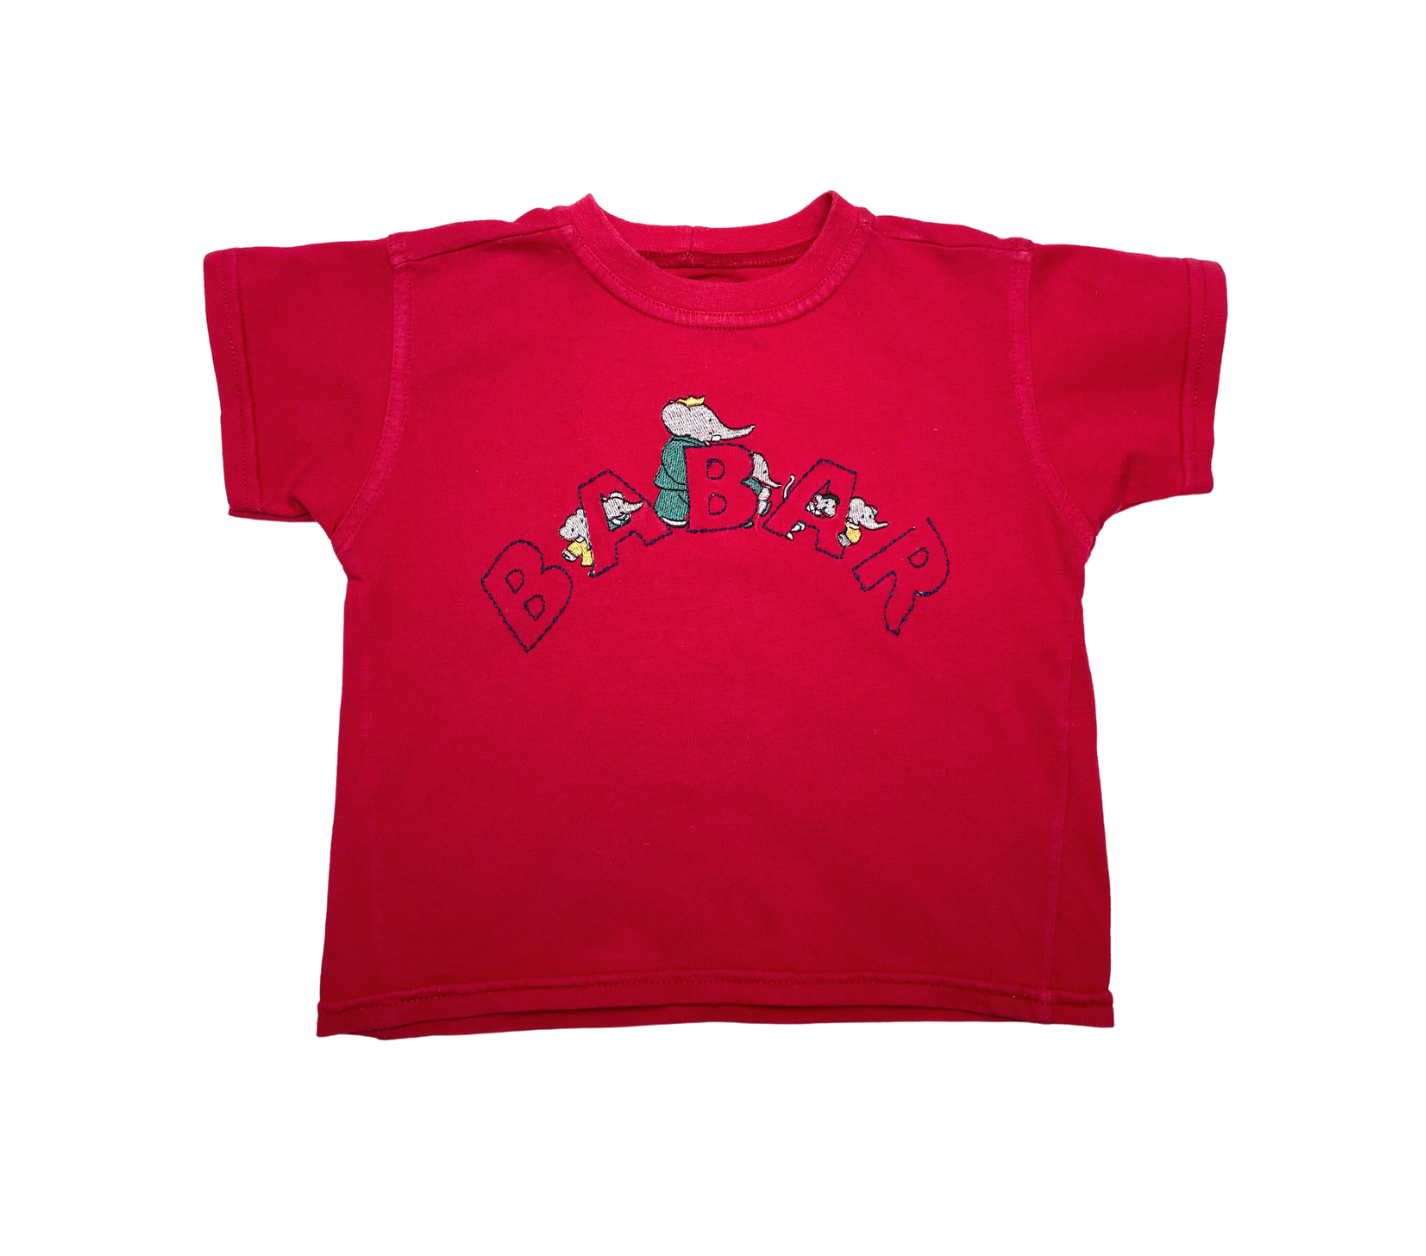 VINTAGE - T-shirt rouge Babar - 18 mois